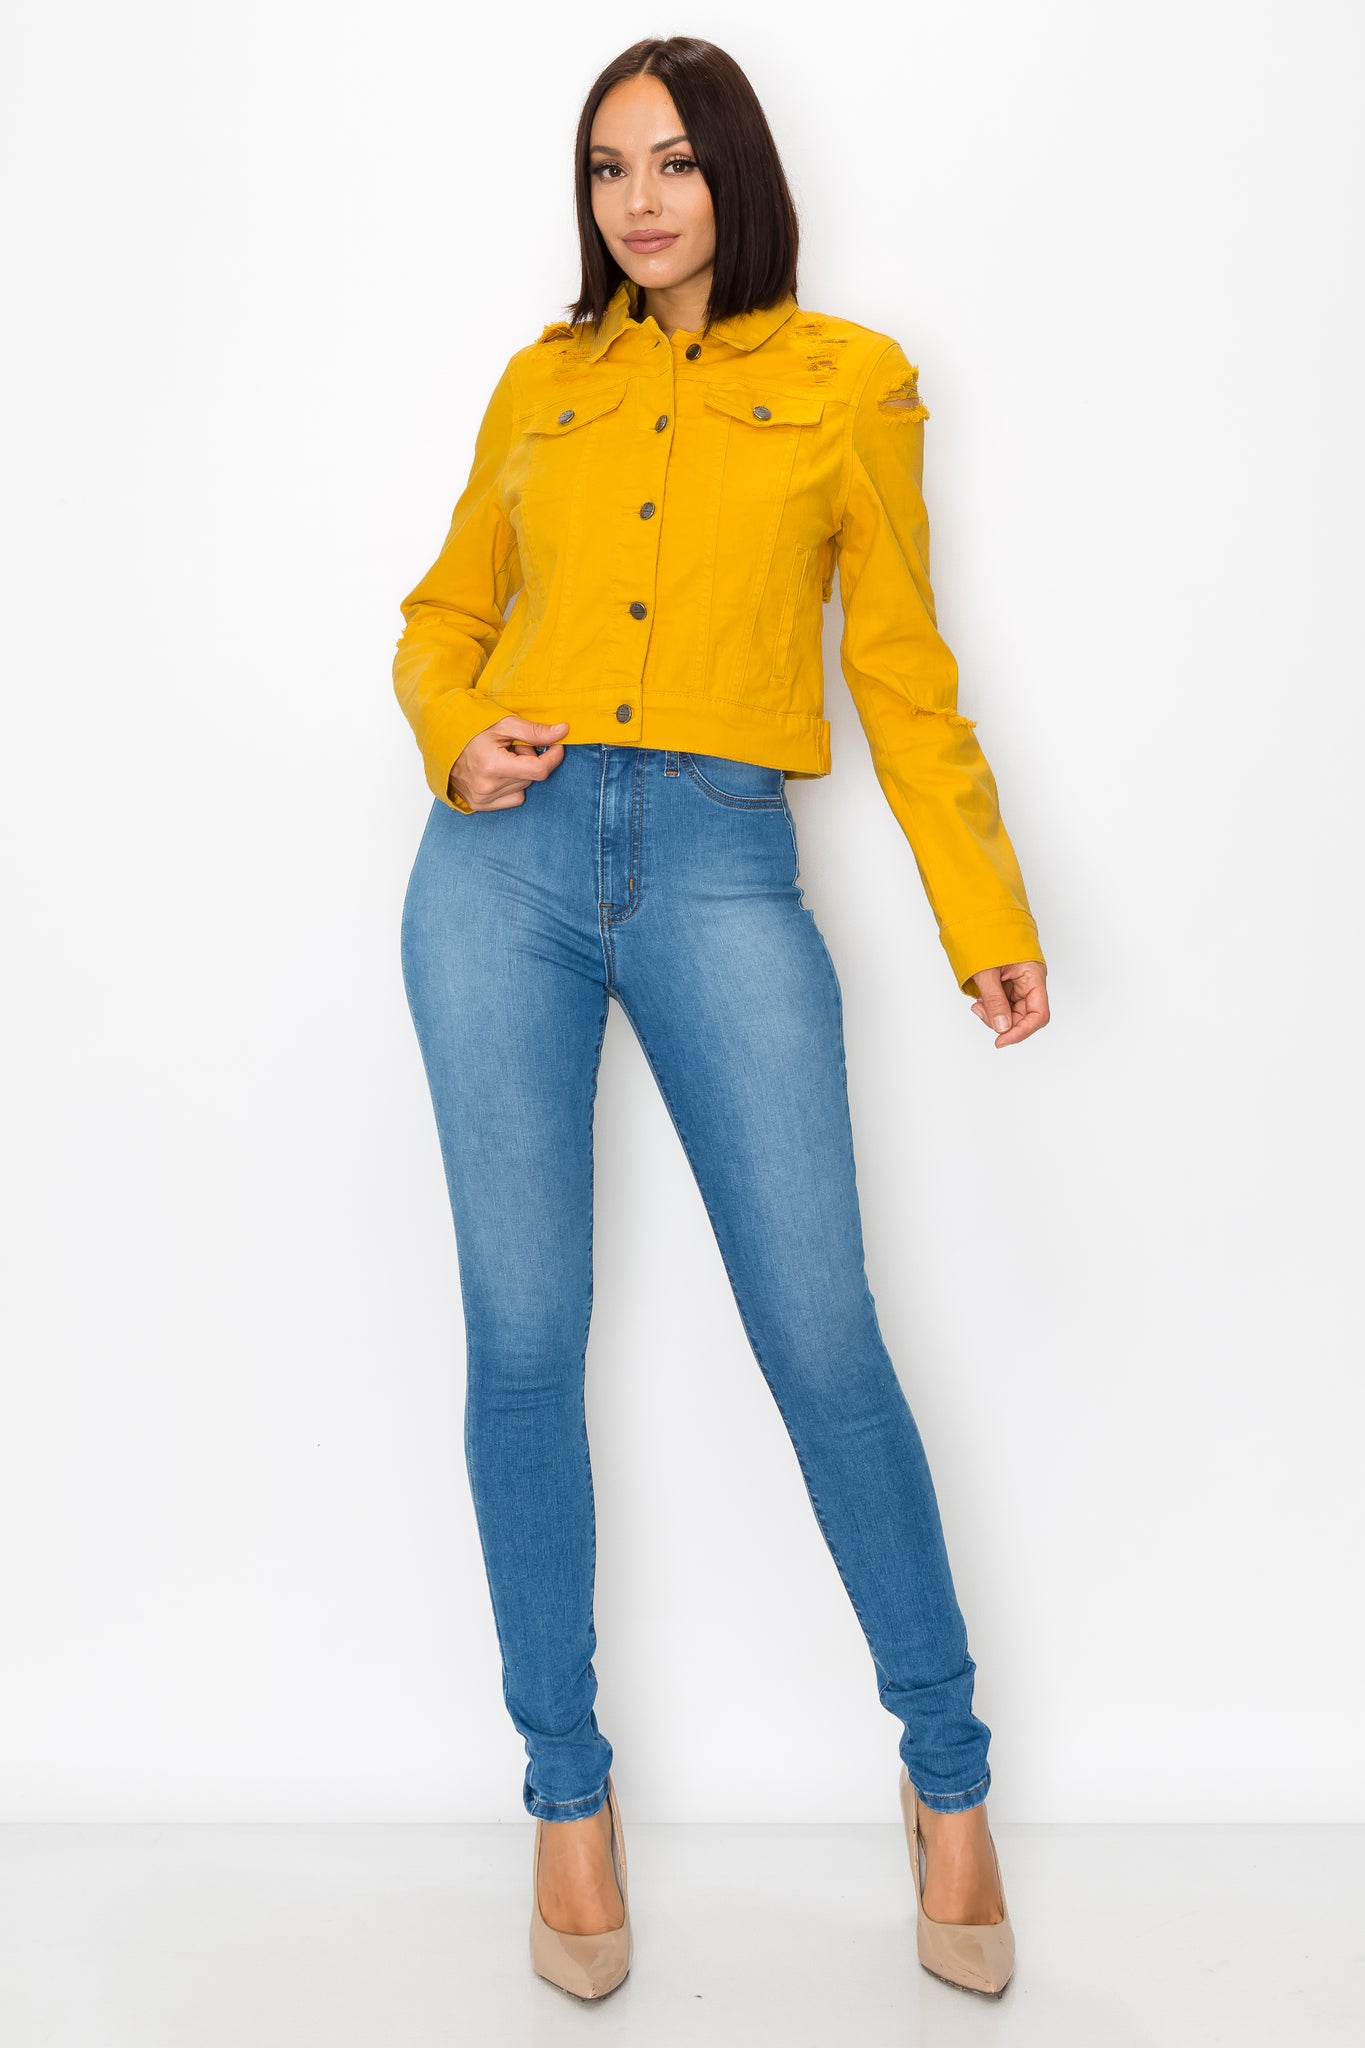 Emma Chamberlain High Key Yellow Denim Jacket Only... - Depop